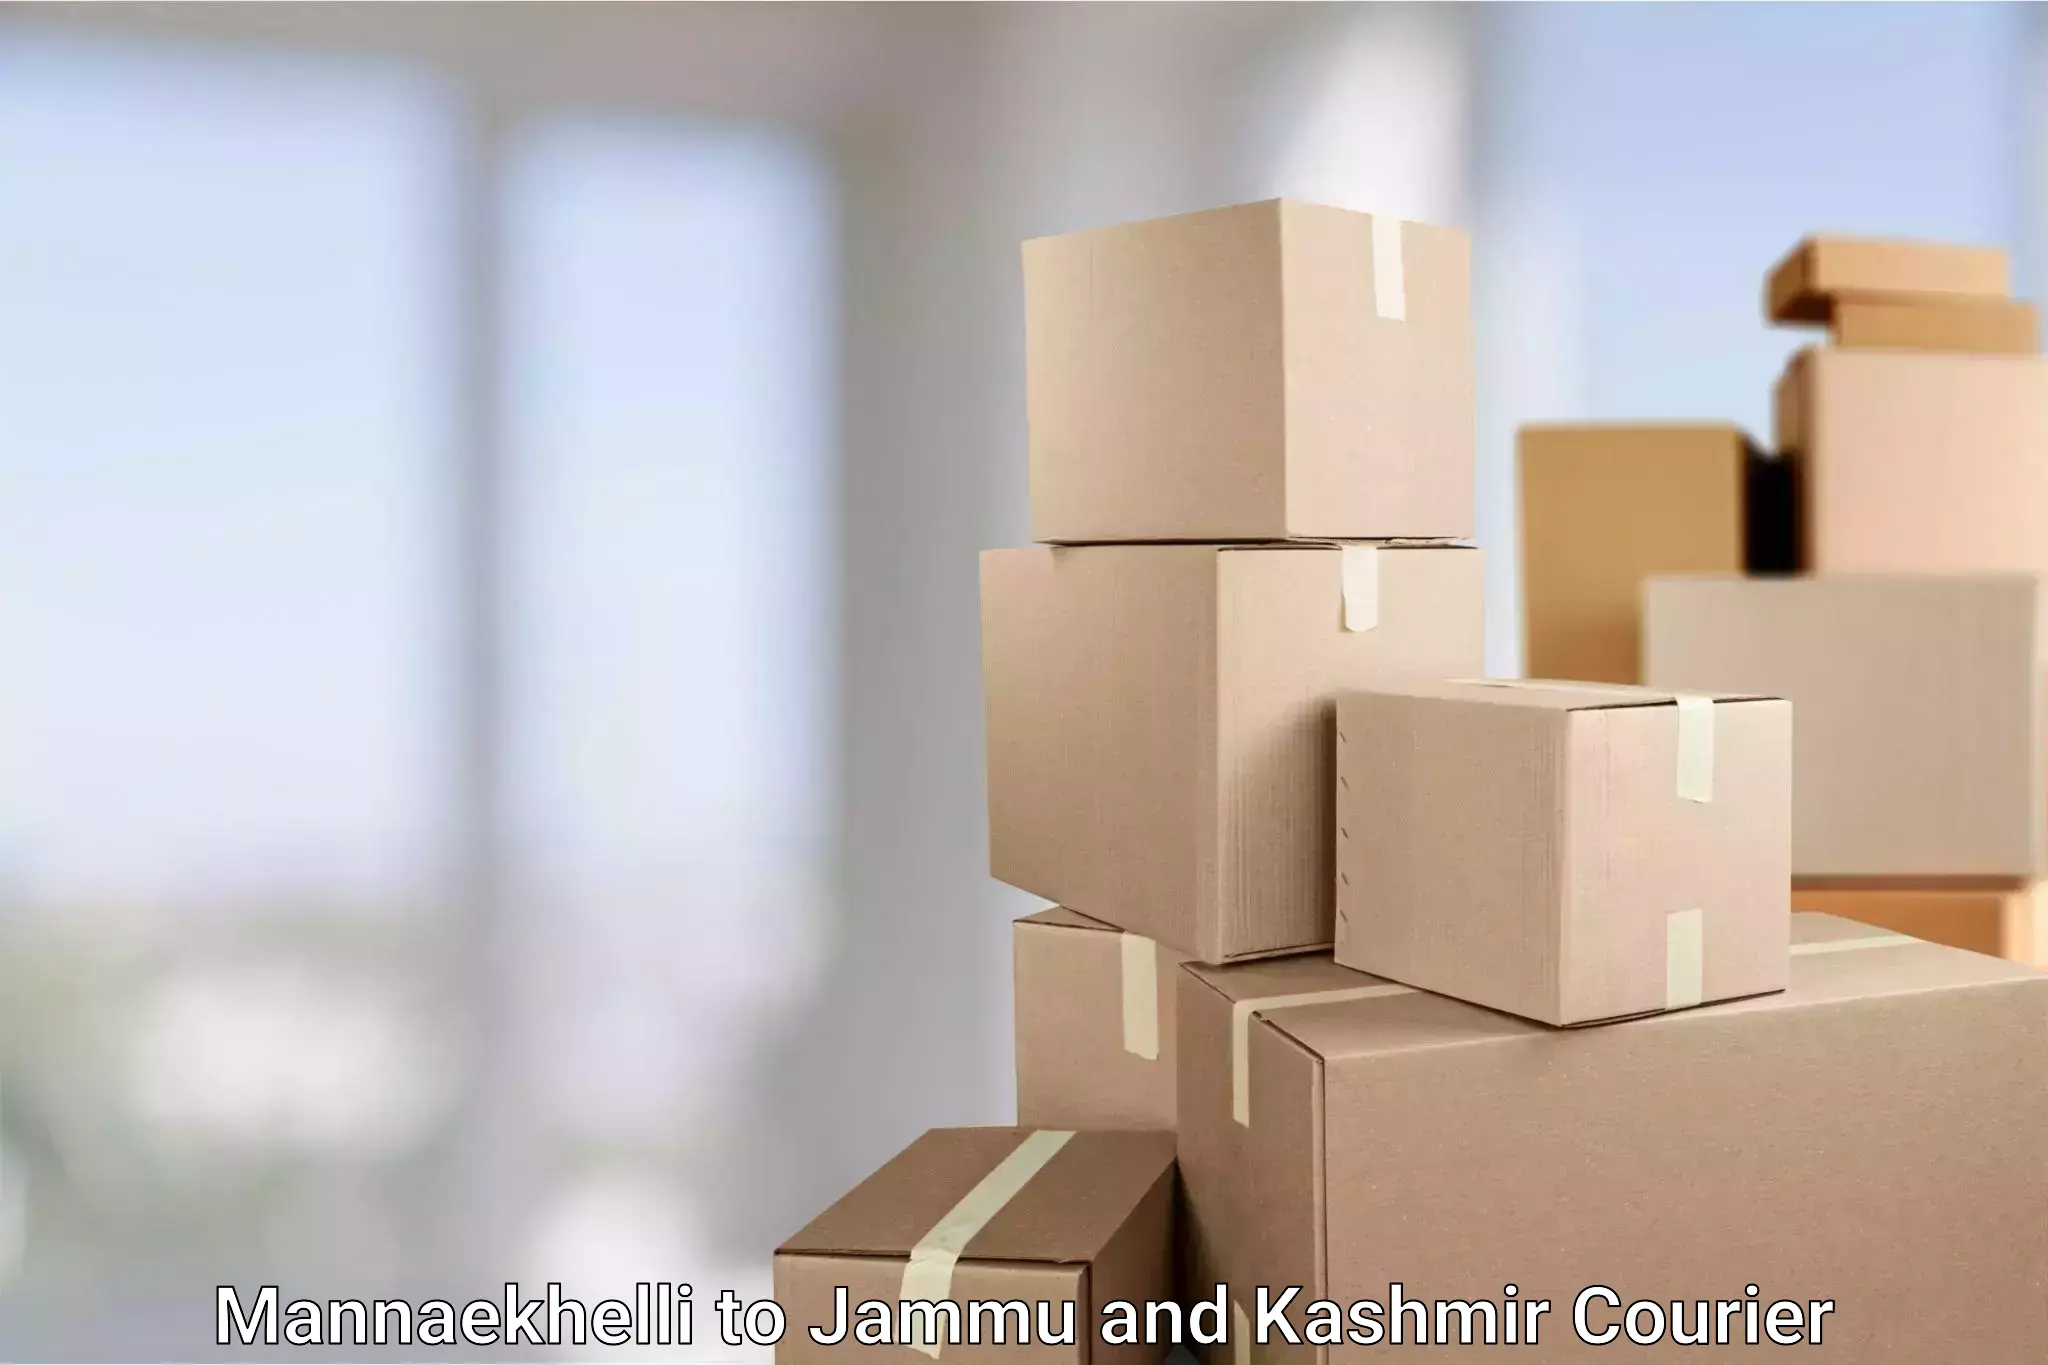 Global shipping solutions Mannaekhelli to Jammu and Kashmir